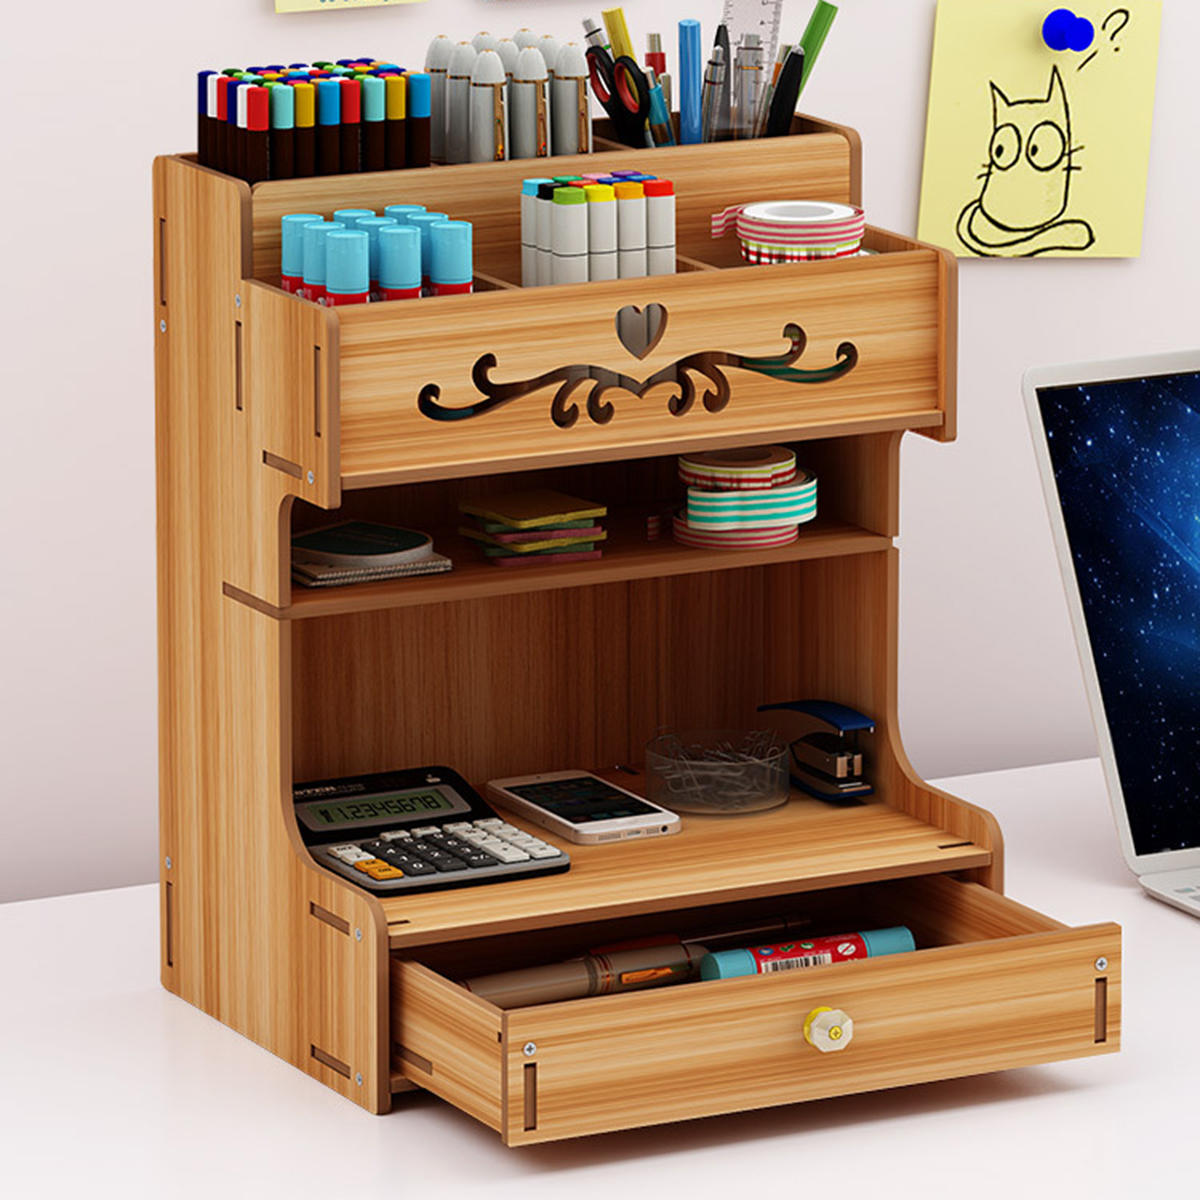 Wooden Desk Organizer Multi-Functional DIY Pen Holder Box Cell Phone Holder Desktop Stationary Home Office Supplies Storage Rack with Drawer COD